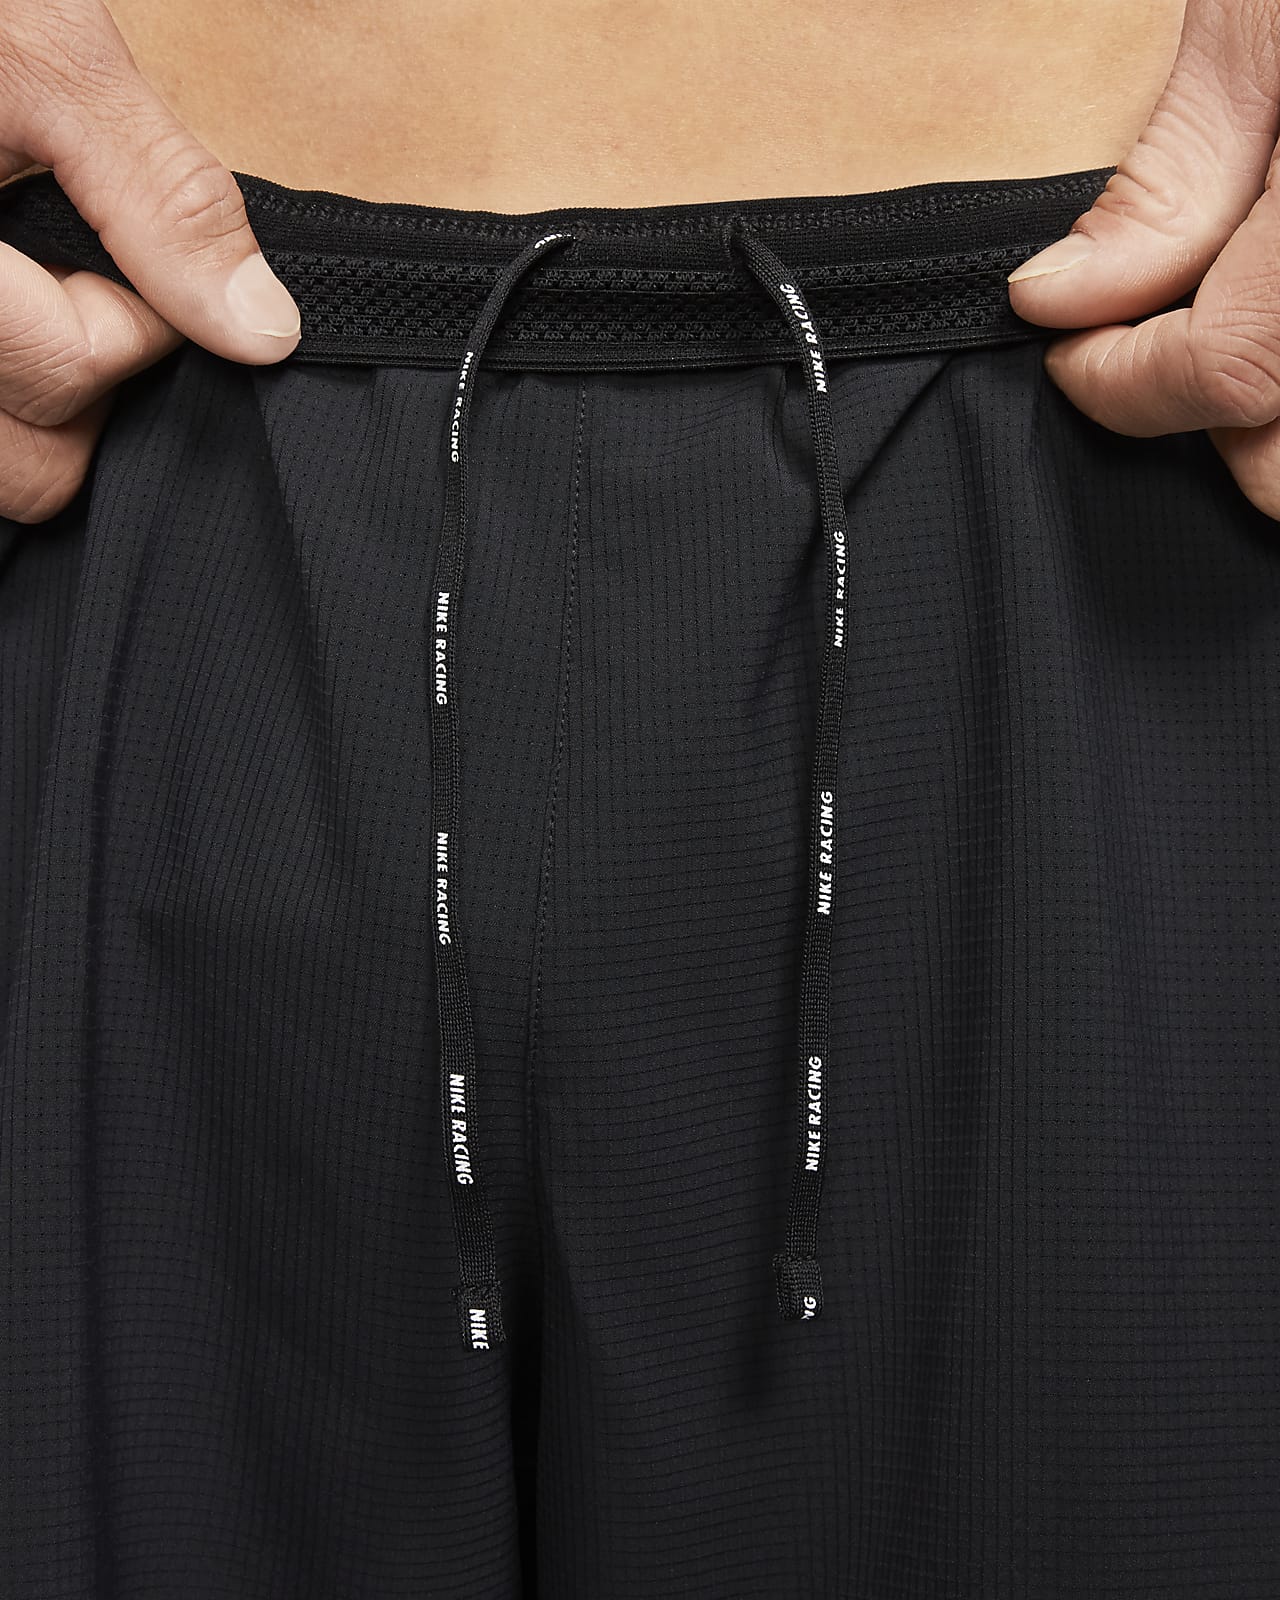 Nike Pantalón corto AeroSwift Race 5cm